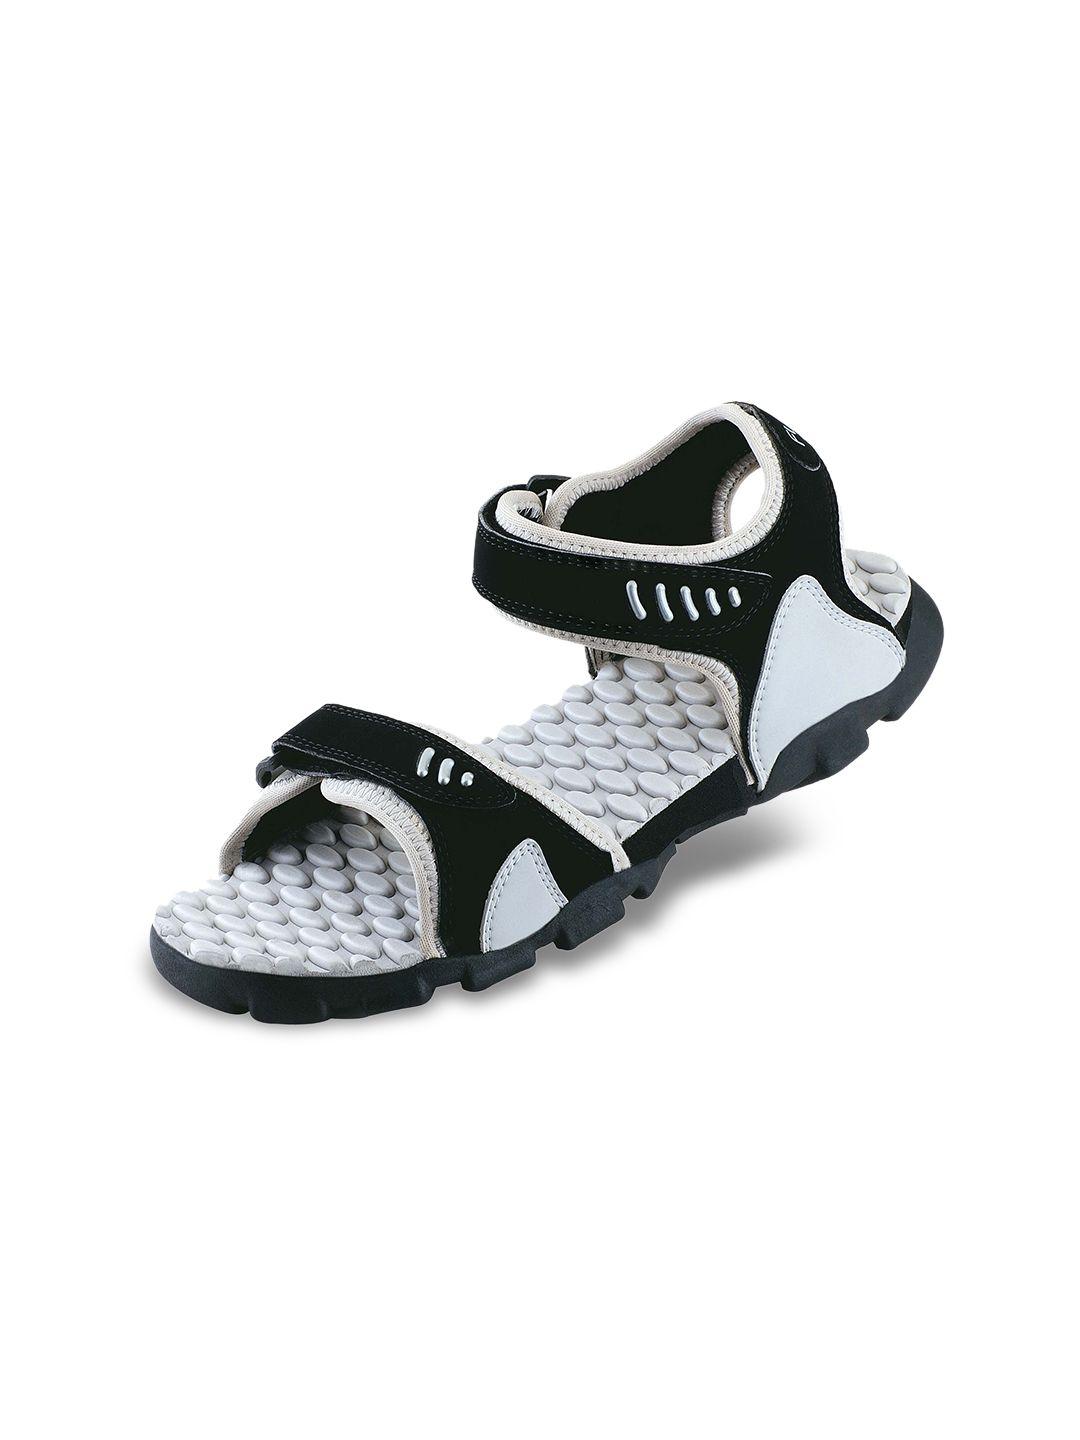 sparx-women-black-&-grey-sports-sandals